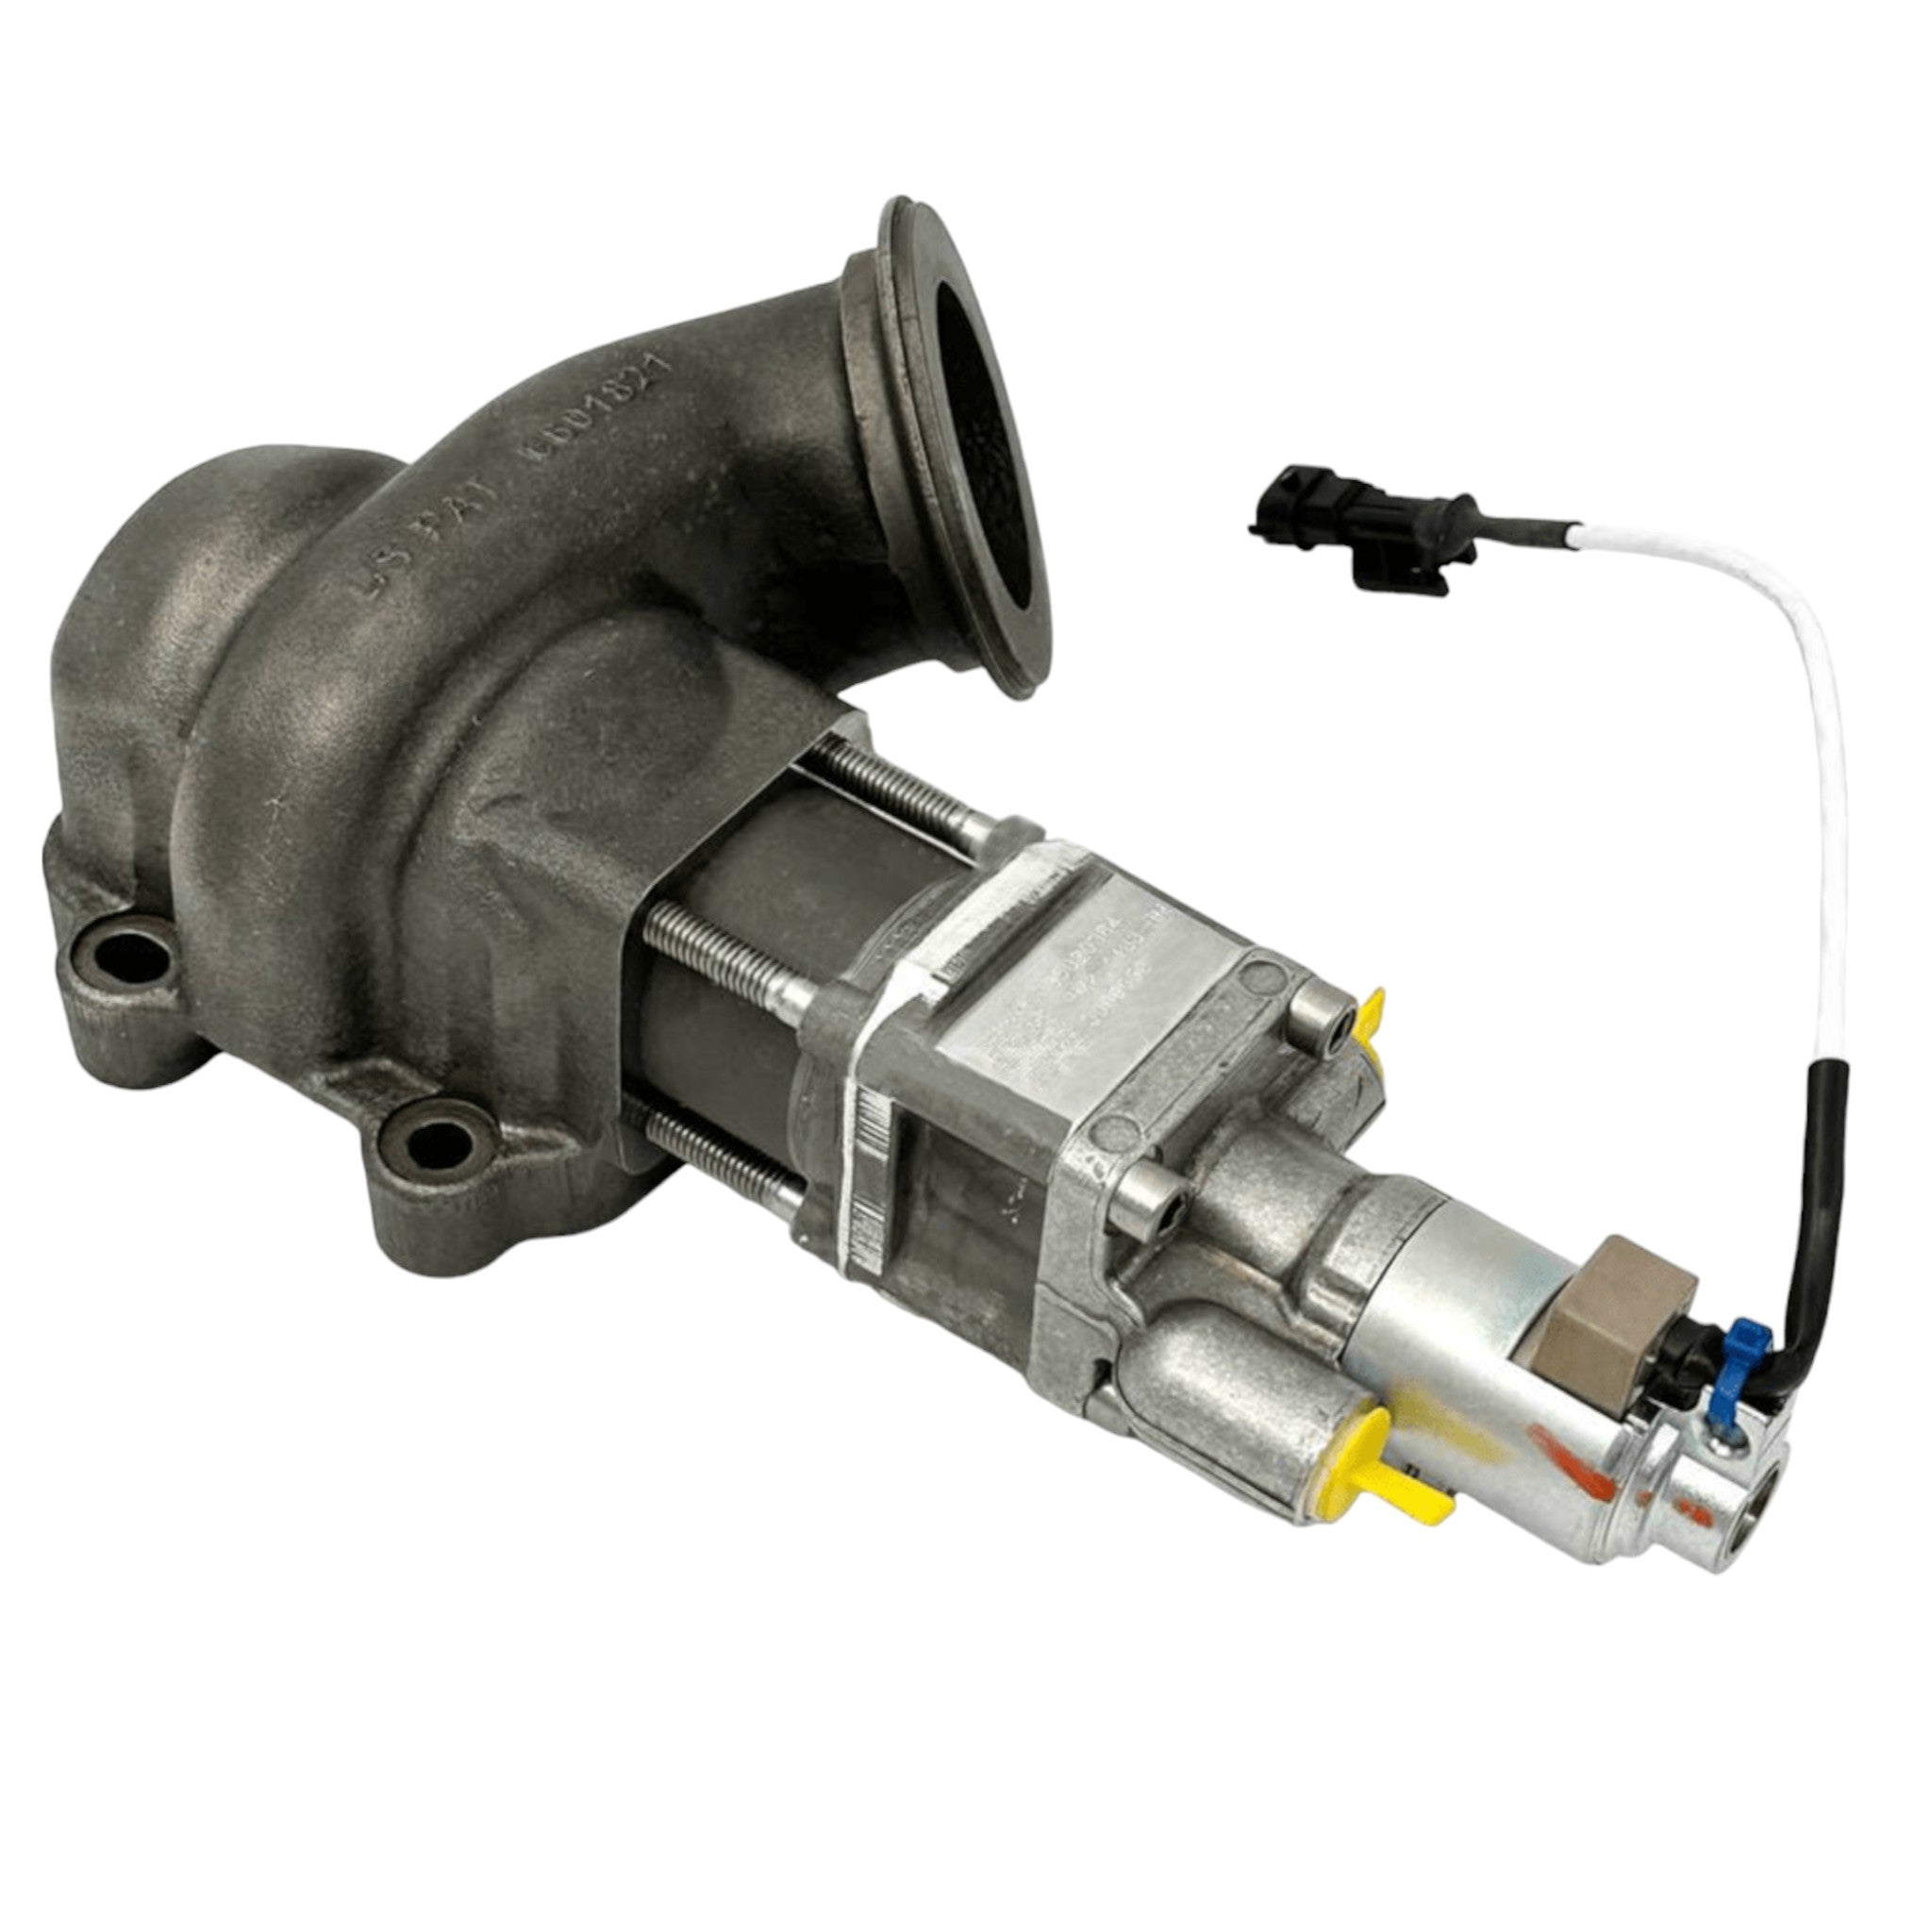 21299107 Genuine Mack Egr Exhaust Gas Recirculation Valve